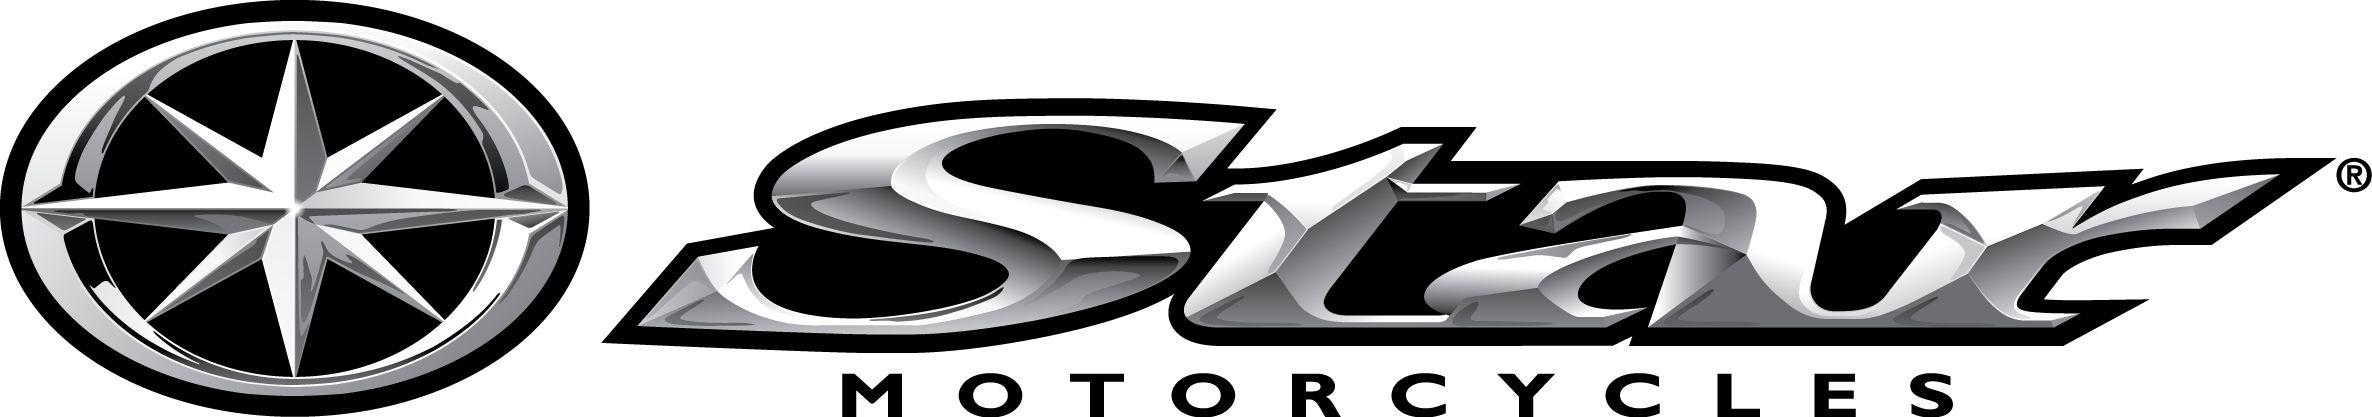 Star Motorcycle Logo - Kibuk Cycle Sales, Inc: Kittanning motorcycle dealer, powersports in ...